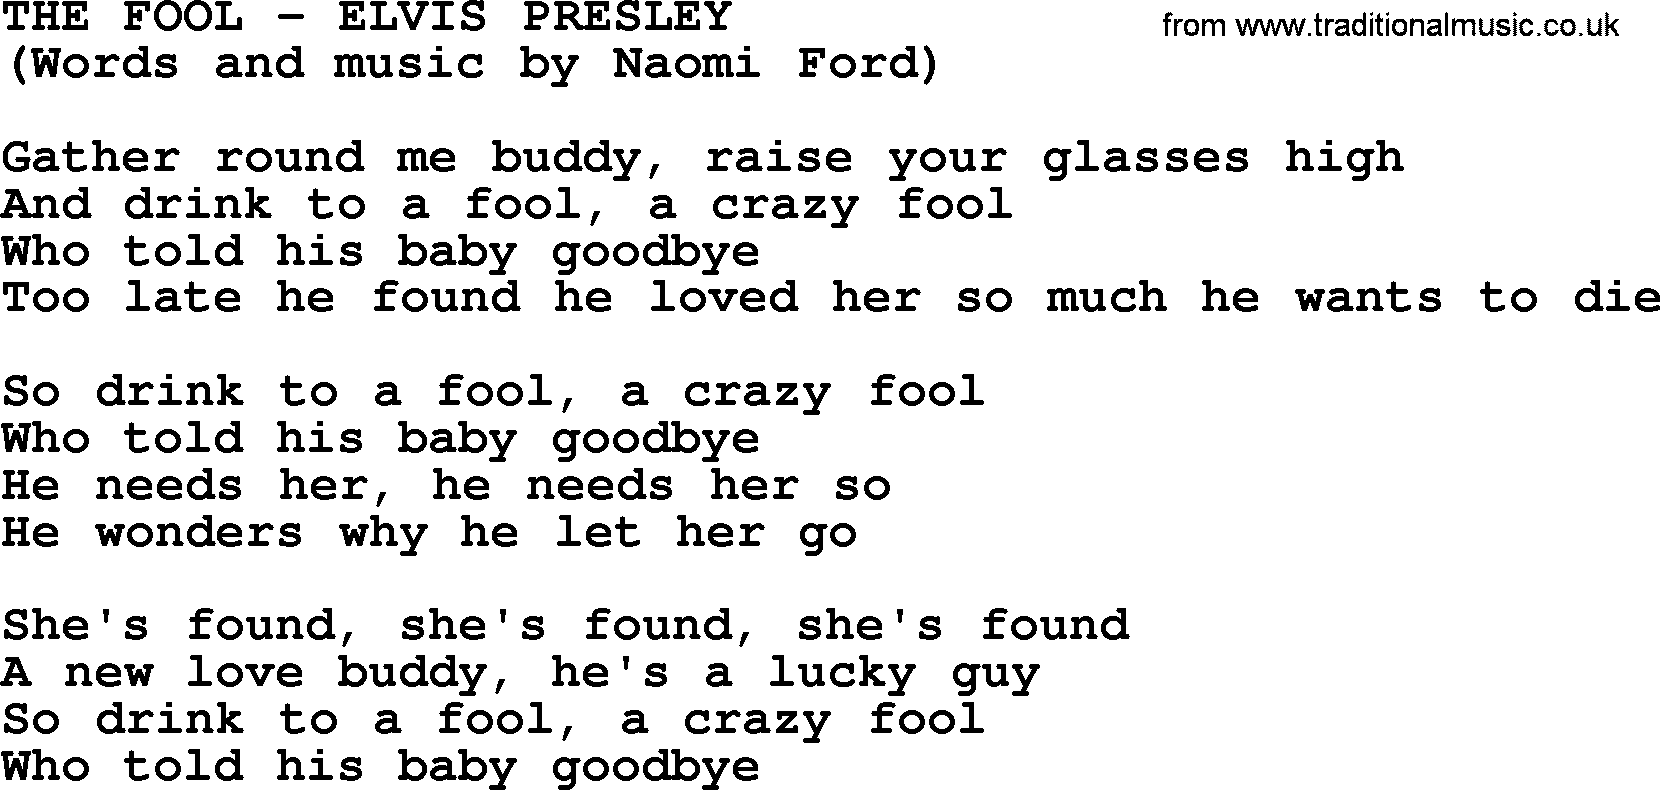 Elvis Presley song: The Fool lyrics